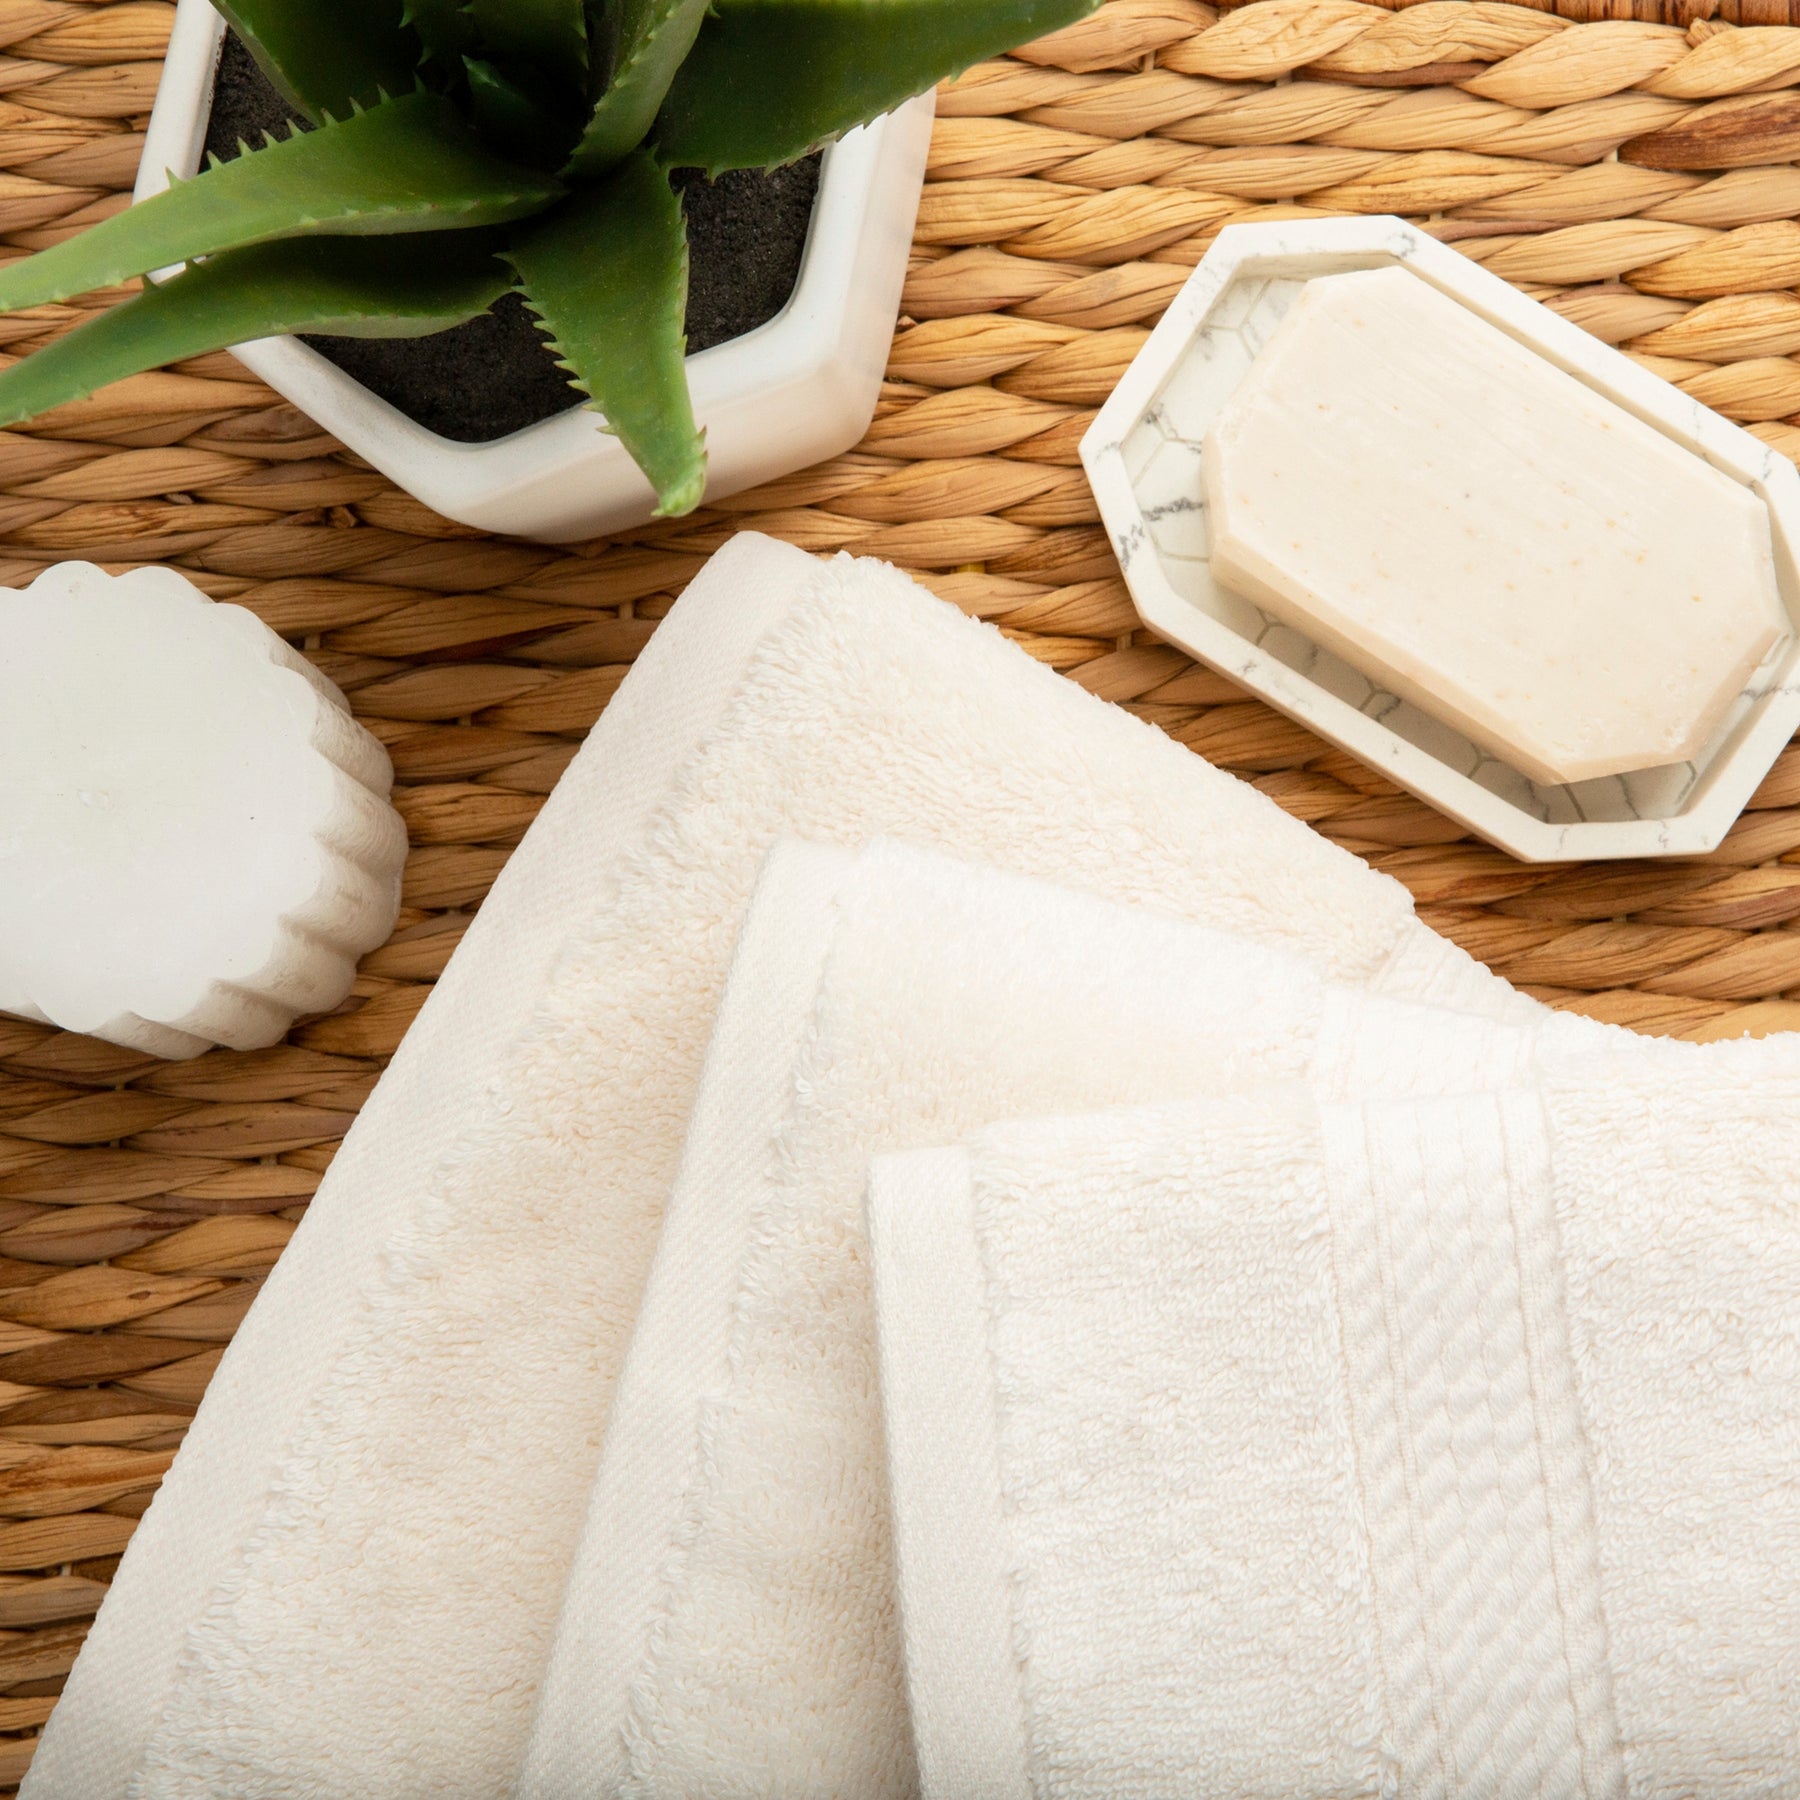 Egyptian Cotton Heavyweight 3 Piece Bath Towel Set - Cream